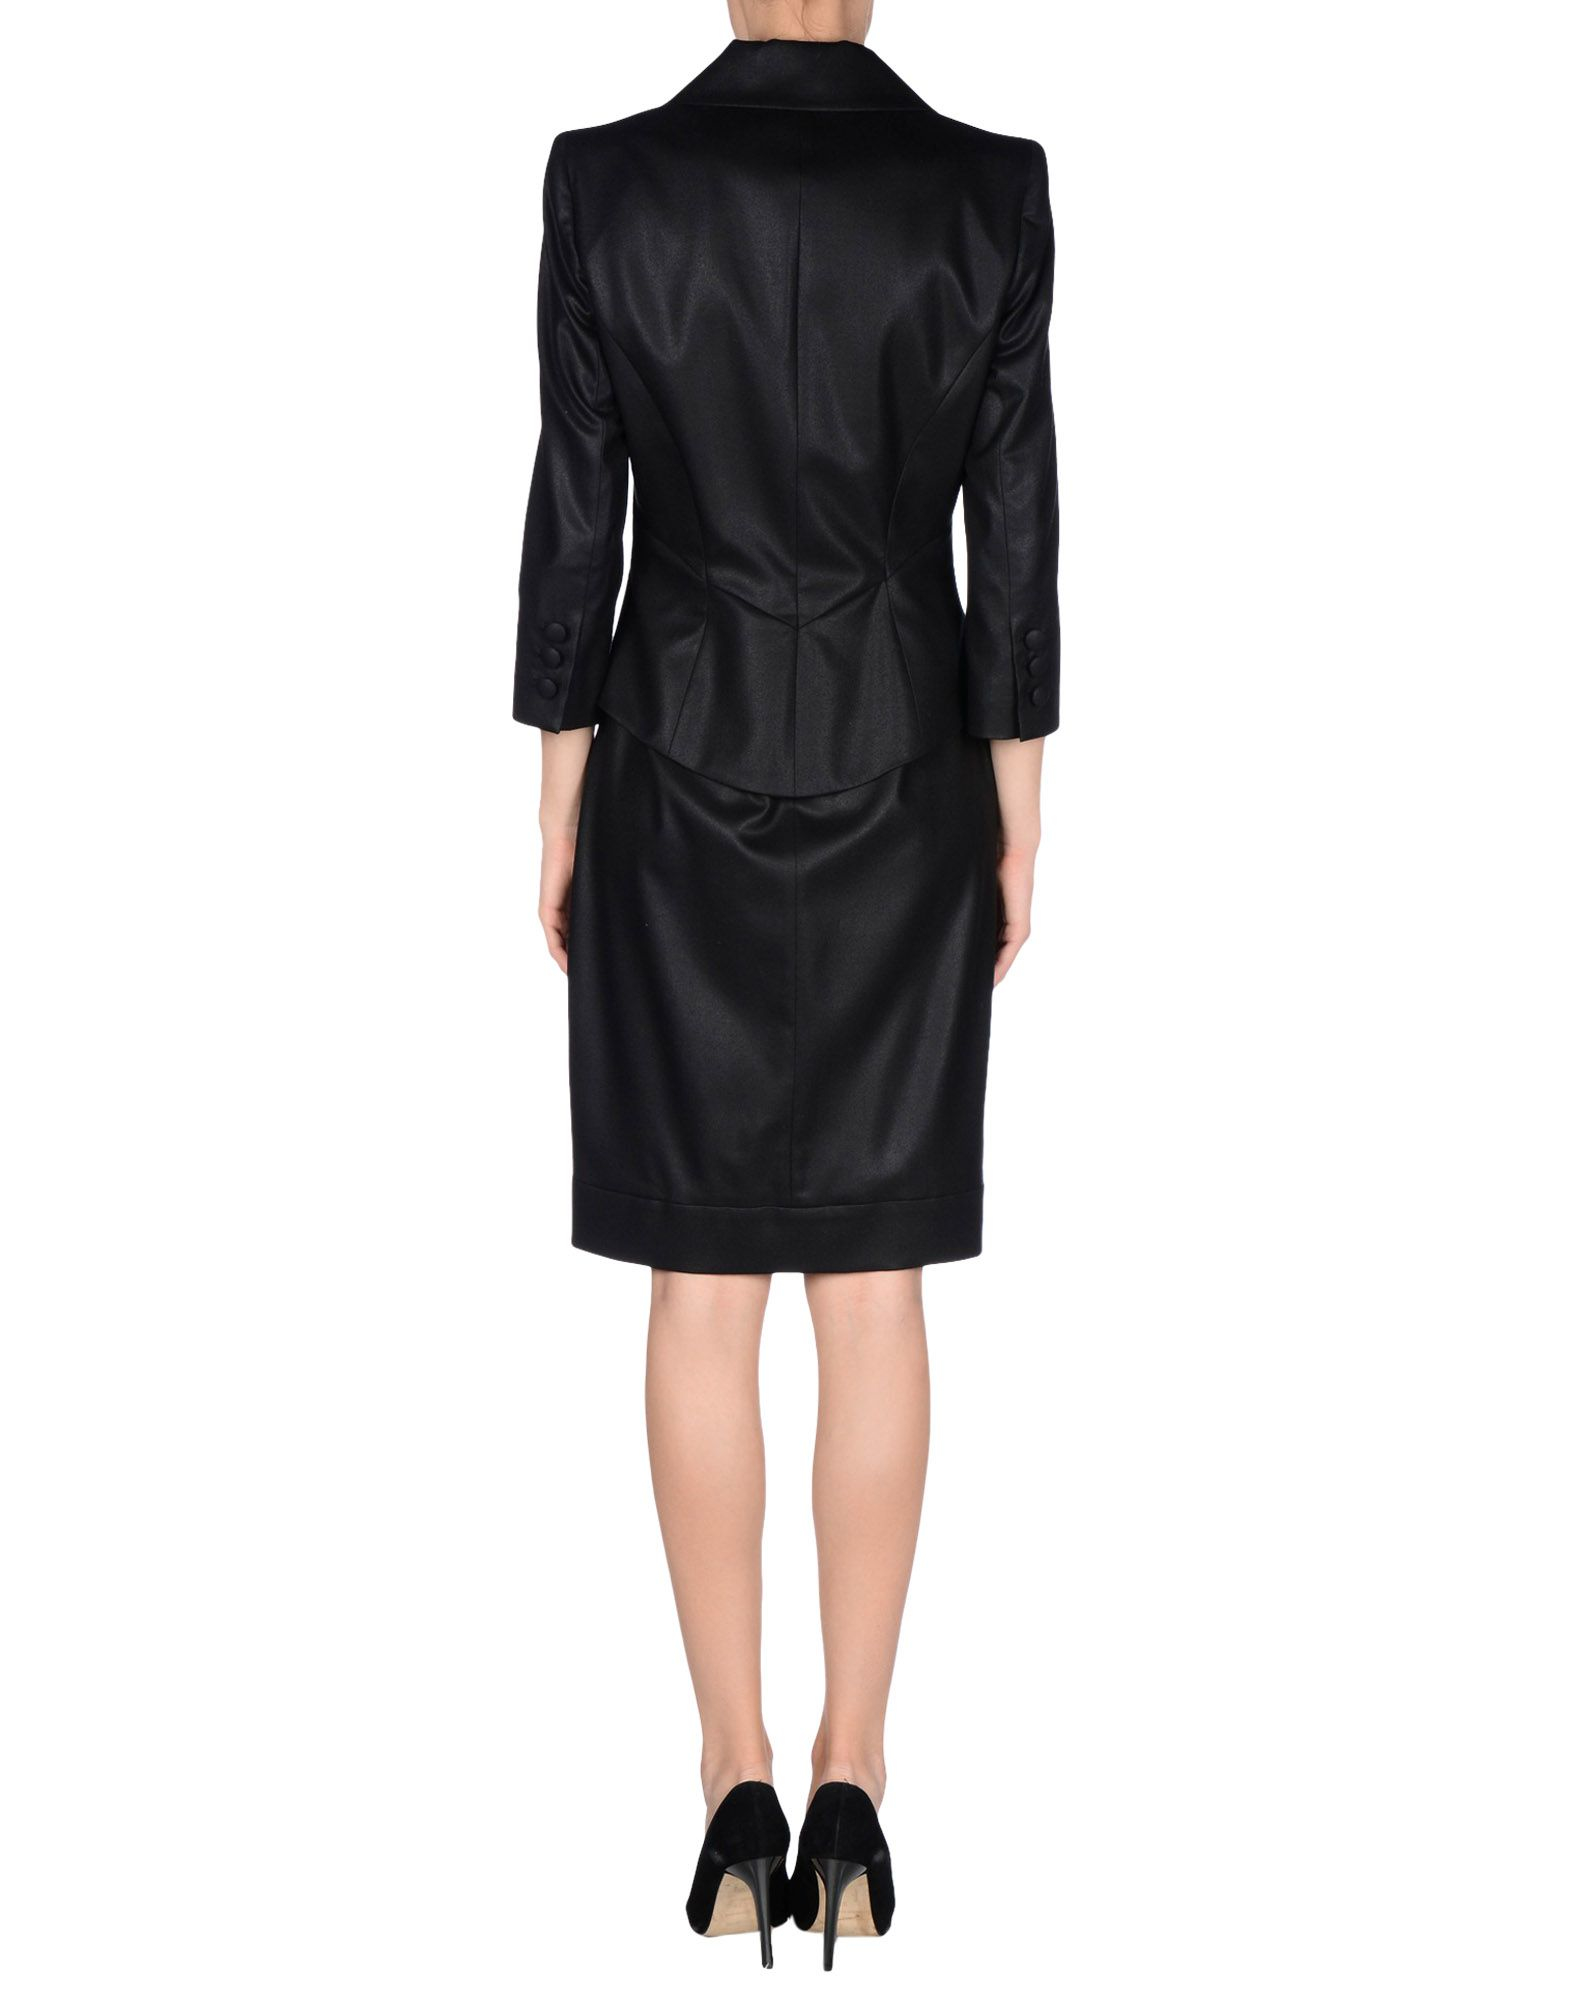 Lyst - Karl Lagerfeld Knee-length Dress in Black